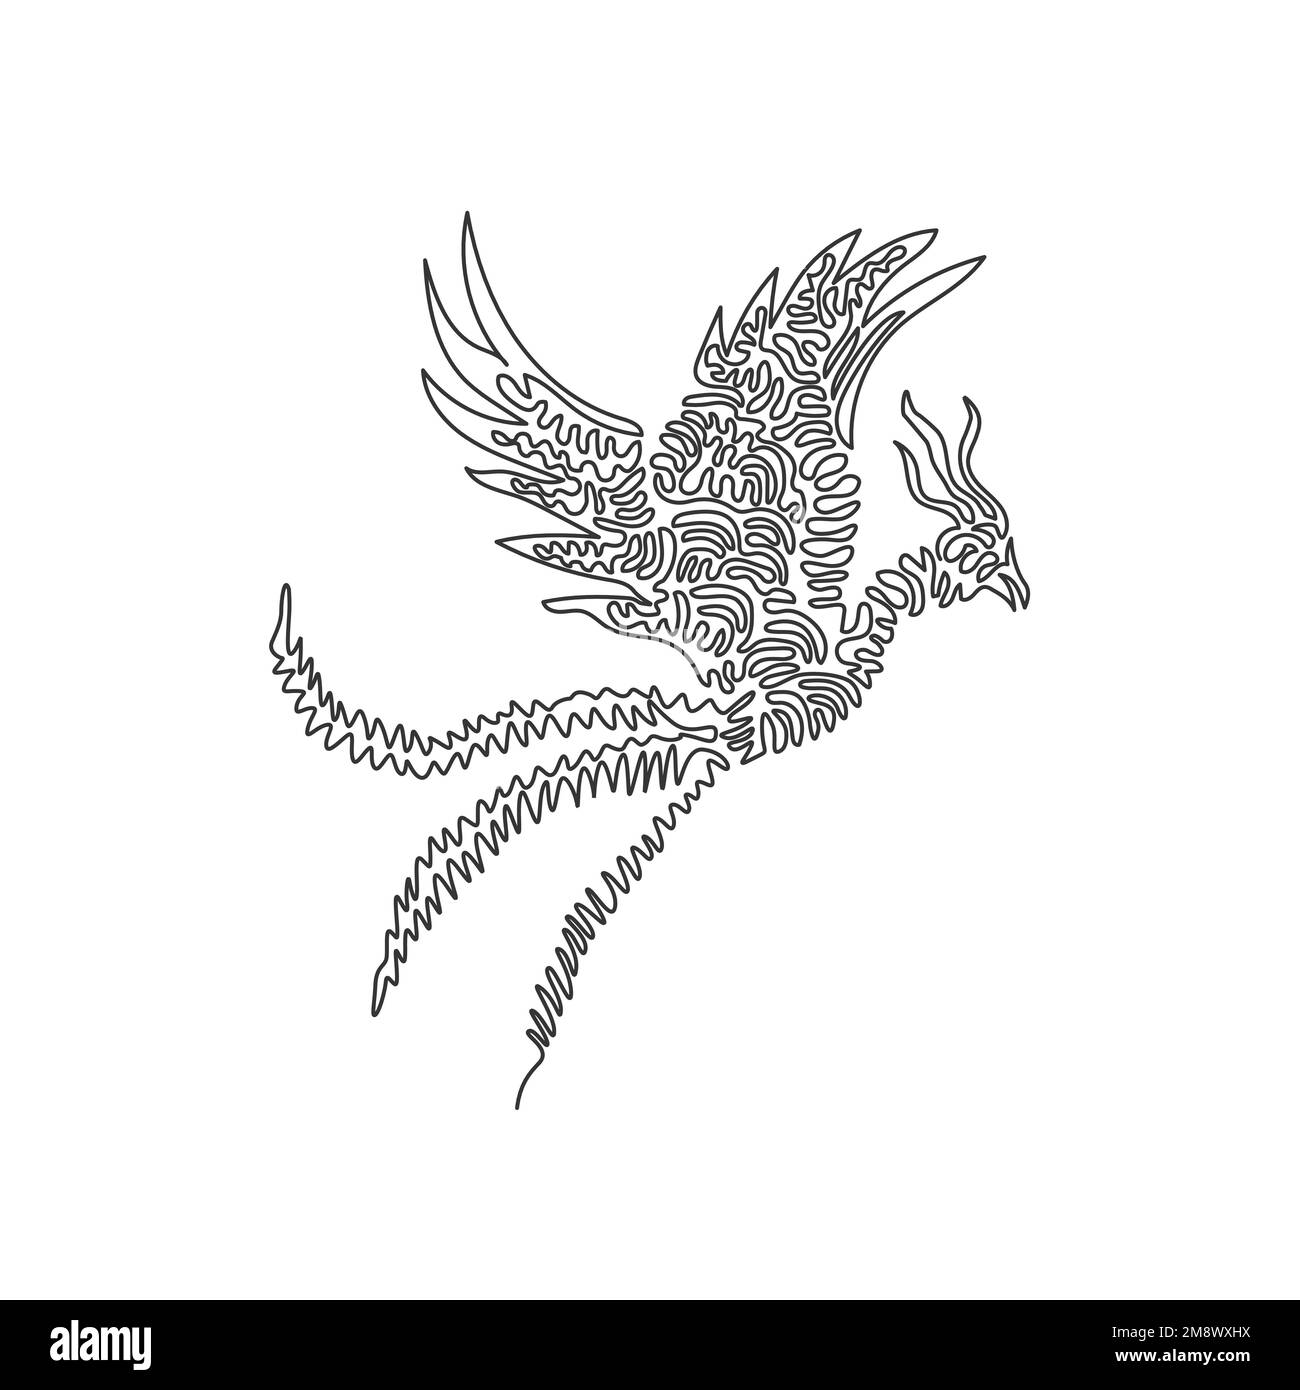 Black Swirl Designs drawing free image download